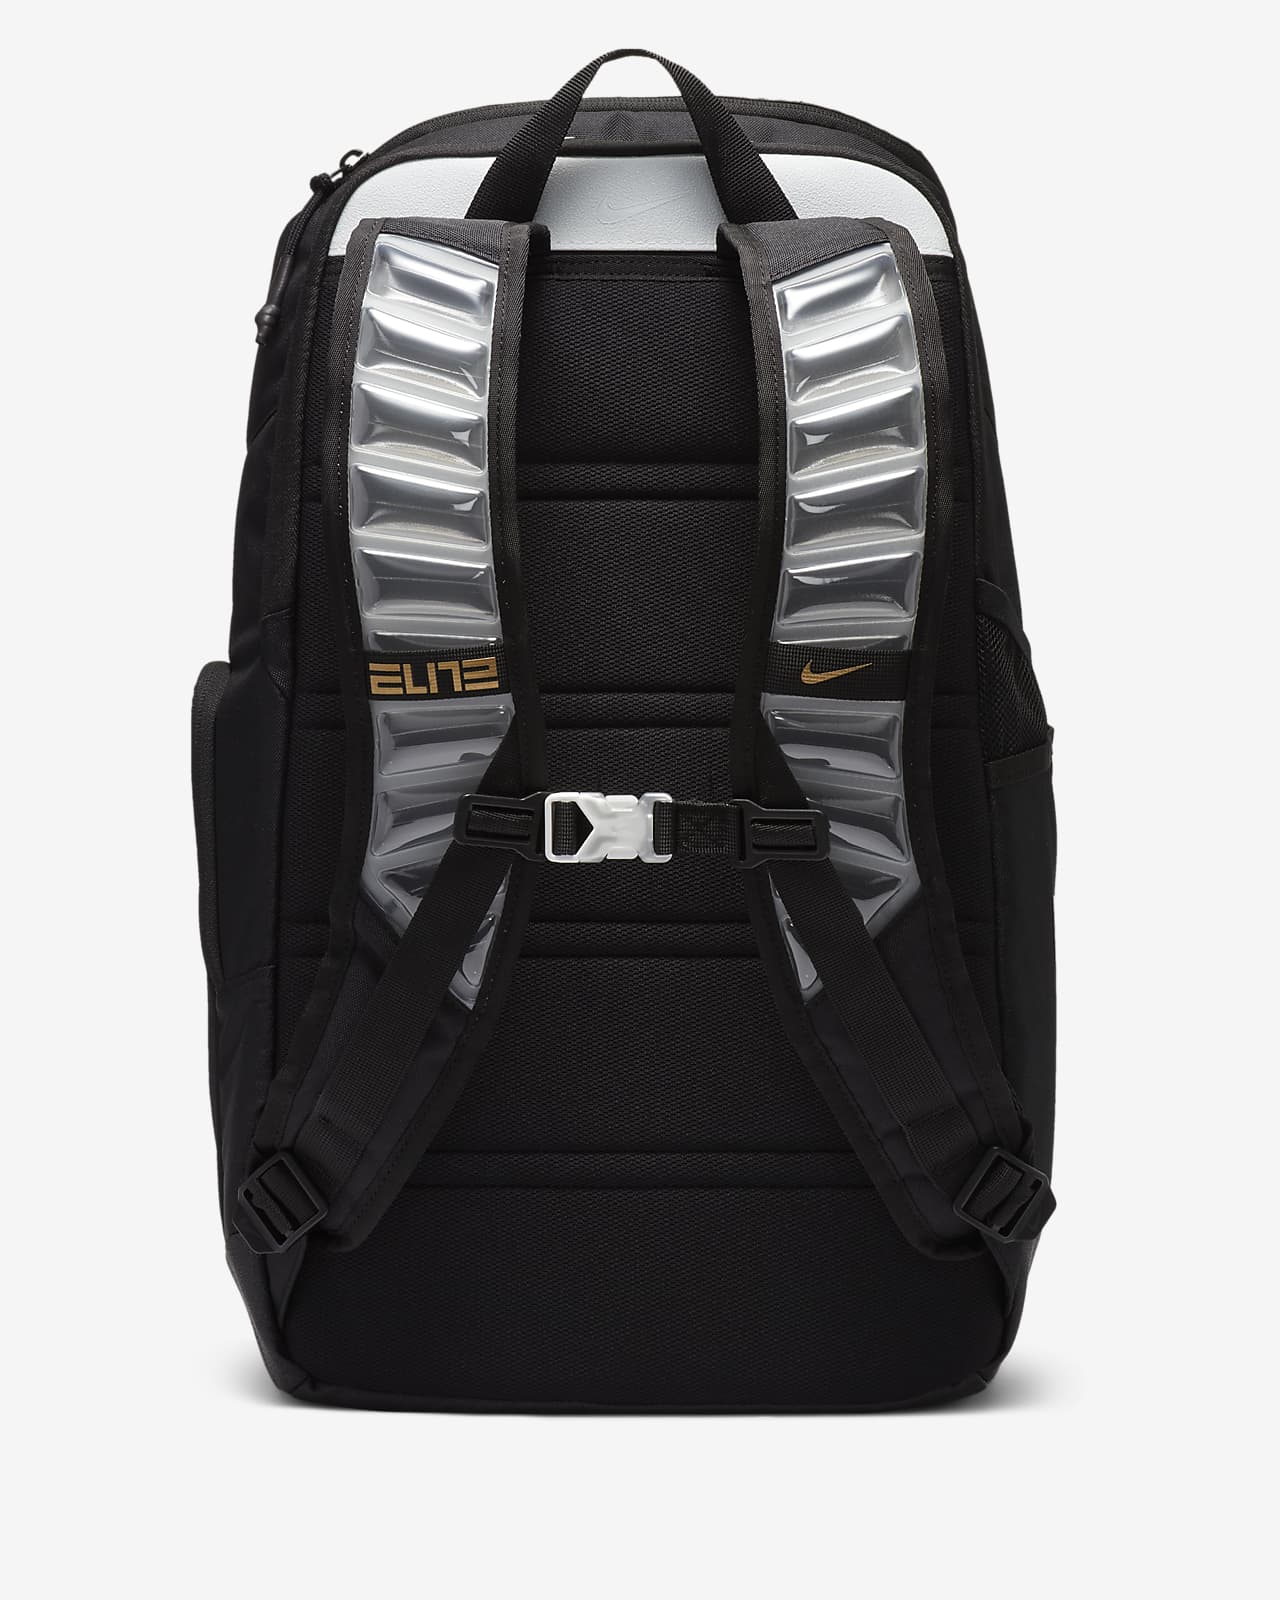 nike elite backpack pro